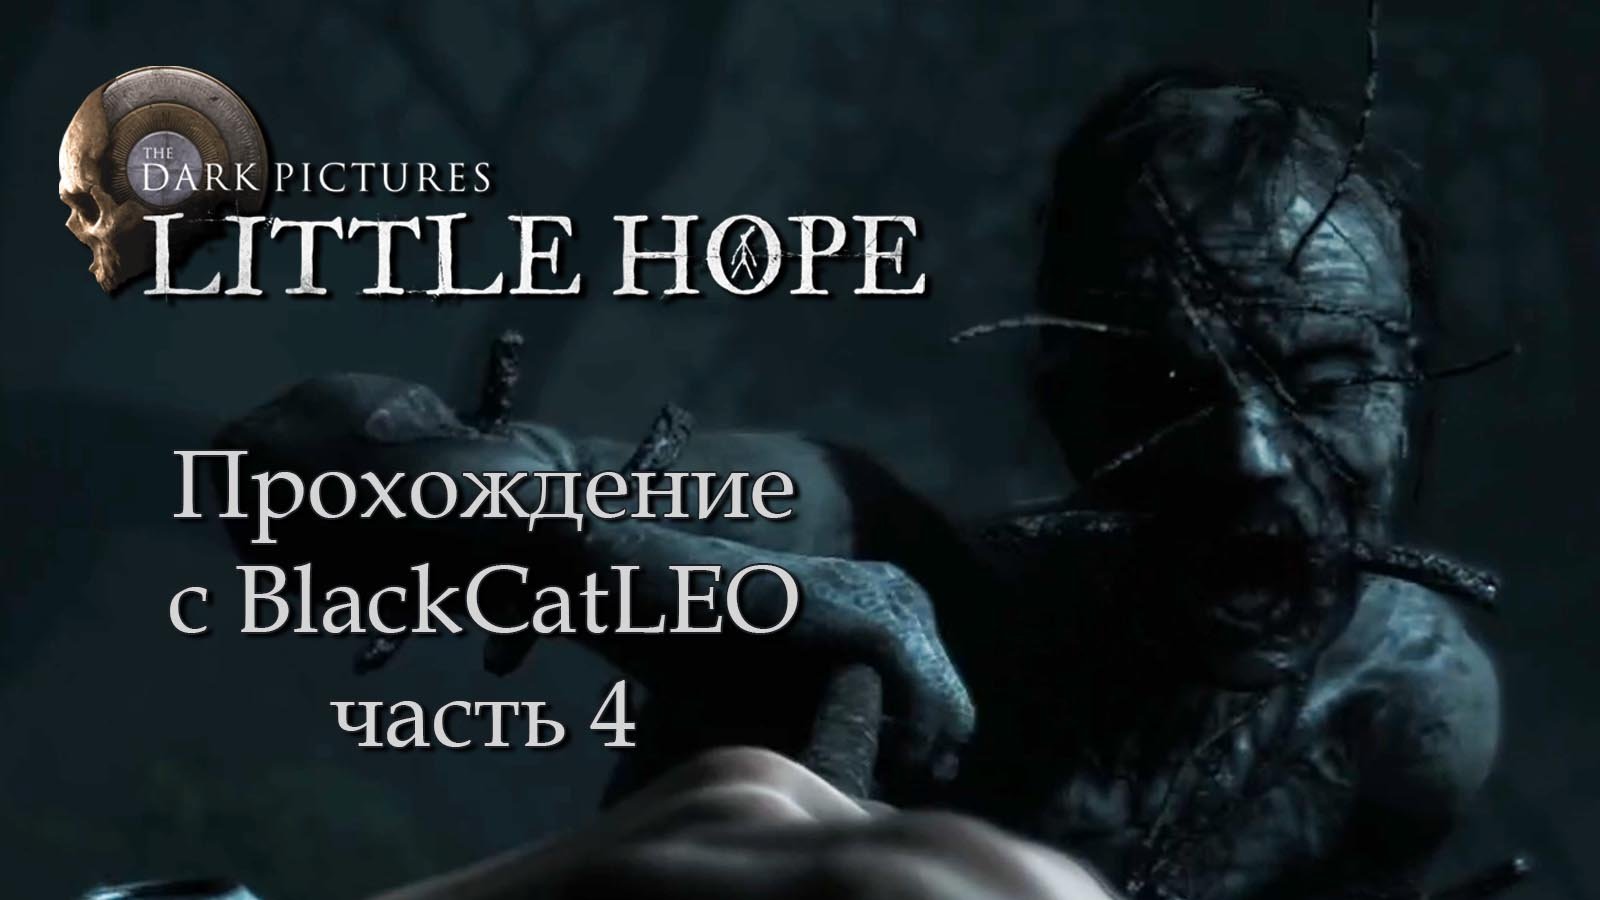 The Dark Pictures Anthology Little Hope - прохождение с BlackCatLEO (ч.4)